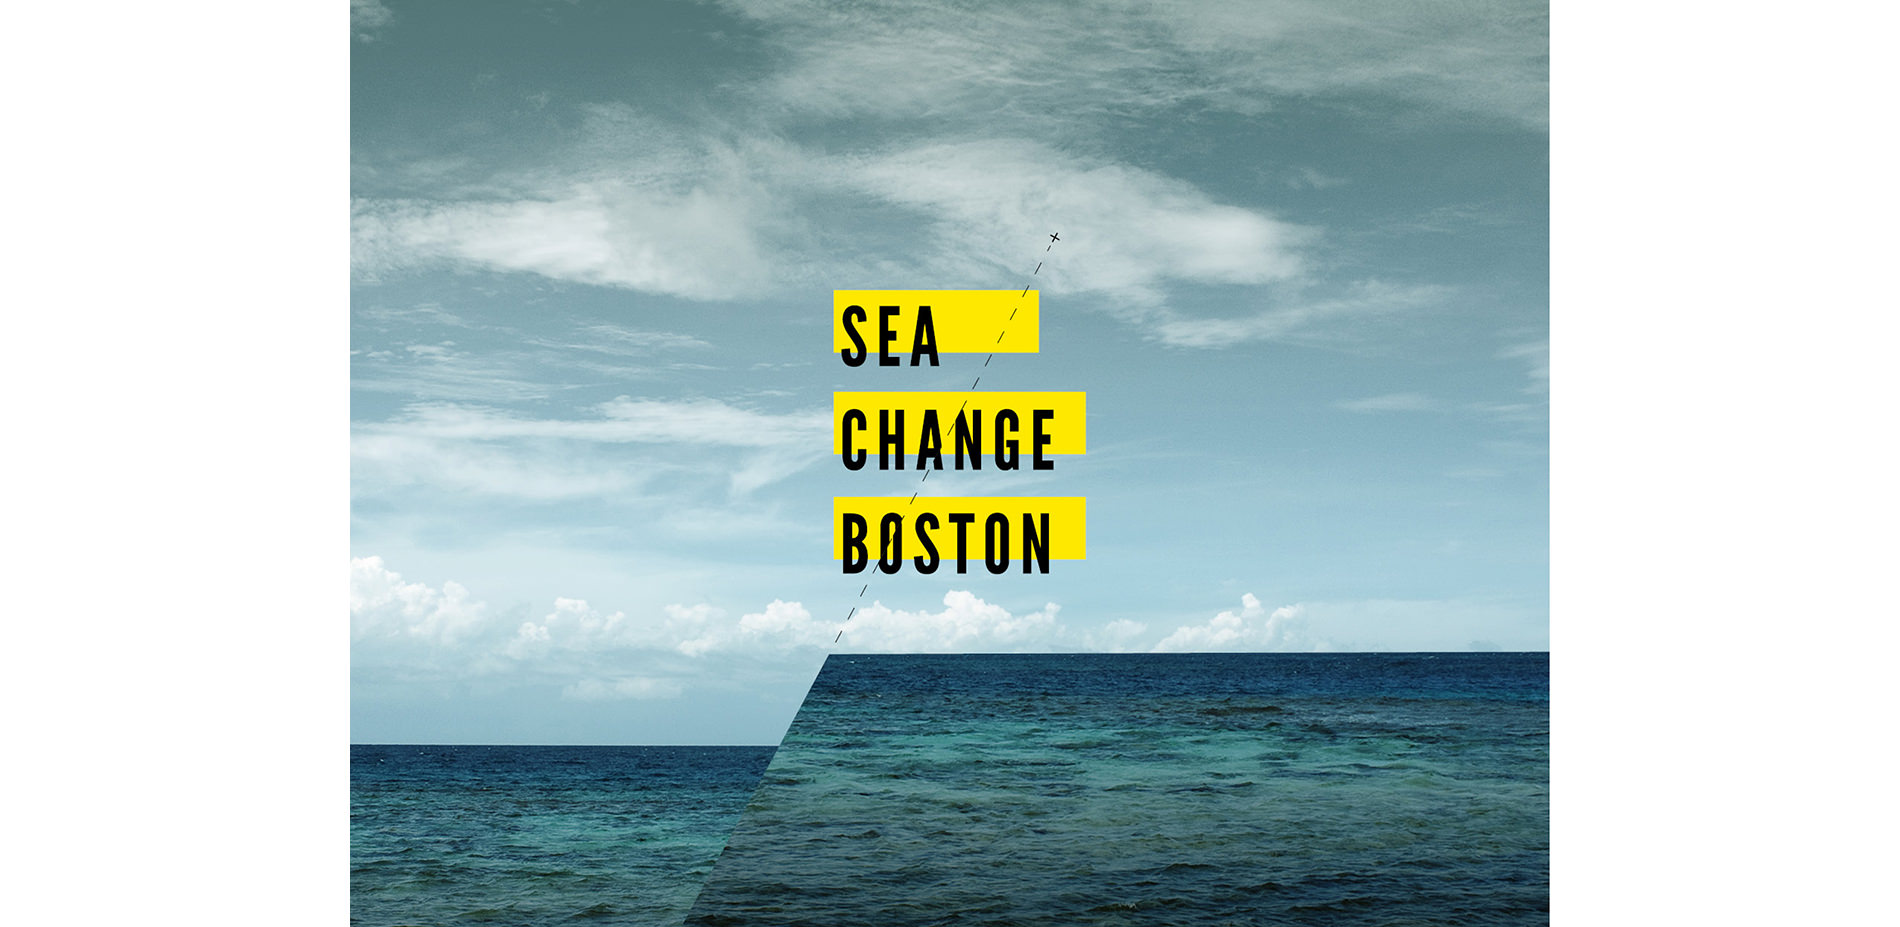 Sea Change Boston Title with Sea and Sky Image